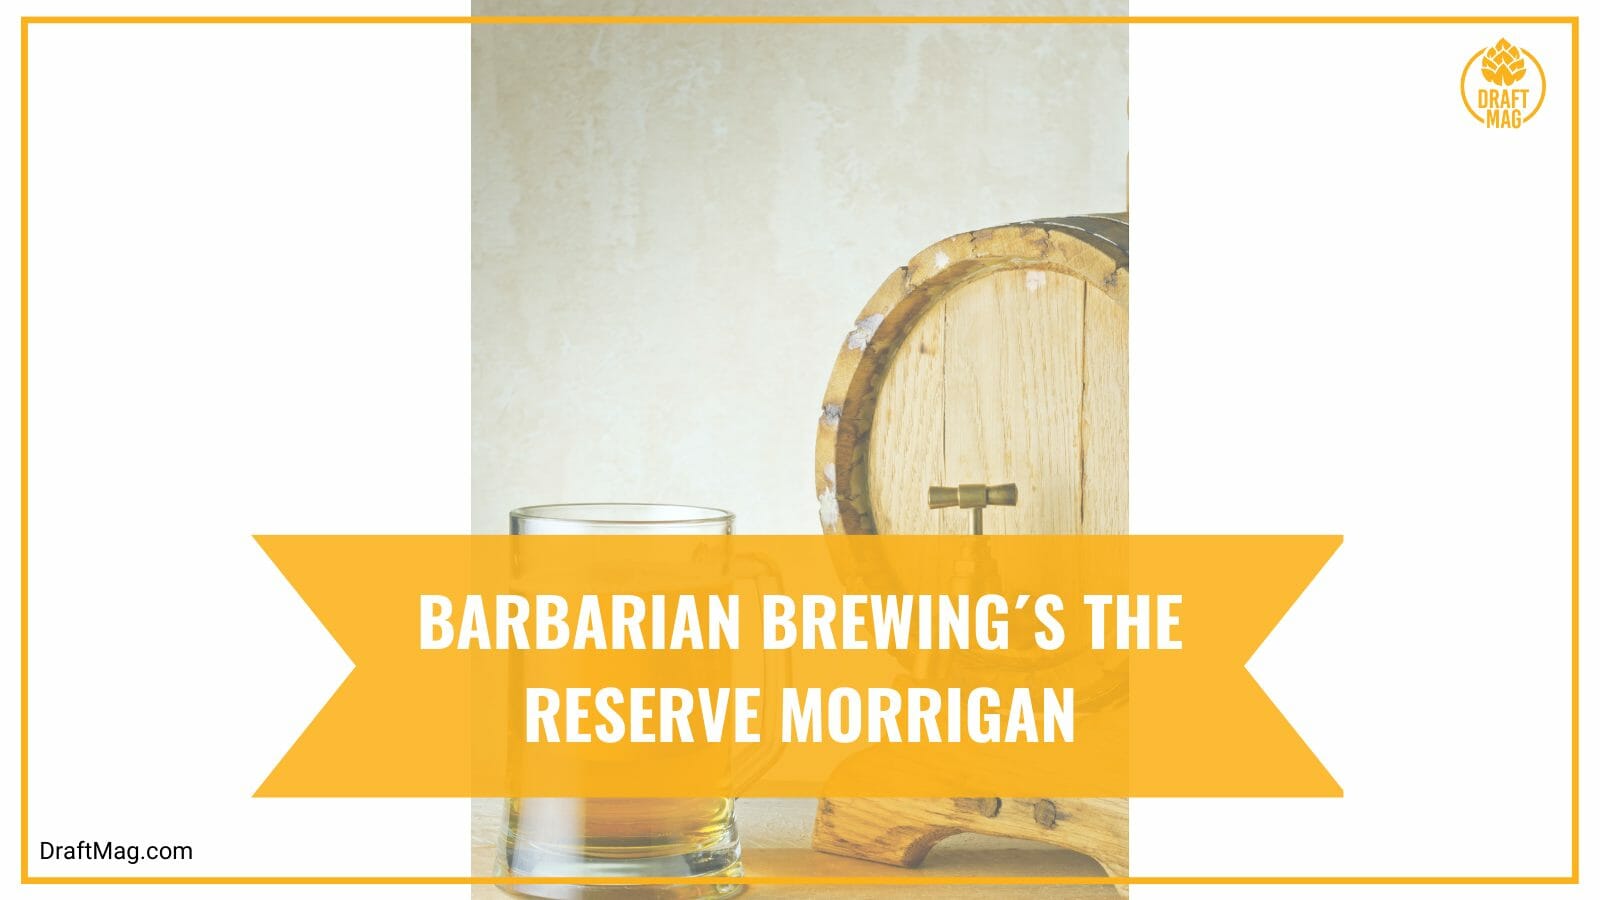 Barbarian brewing the reserve morrigan